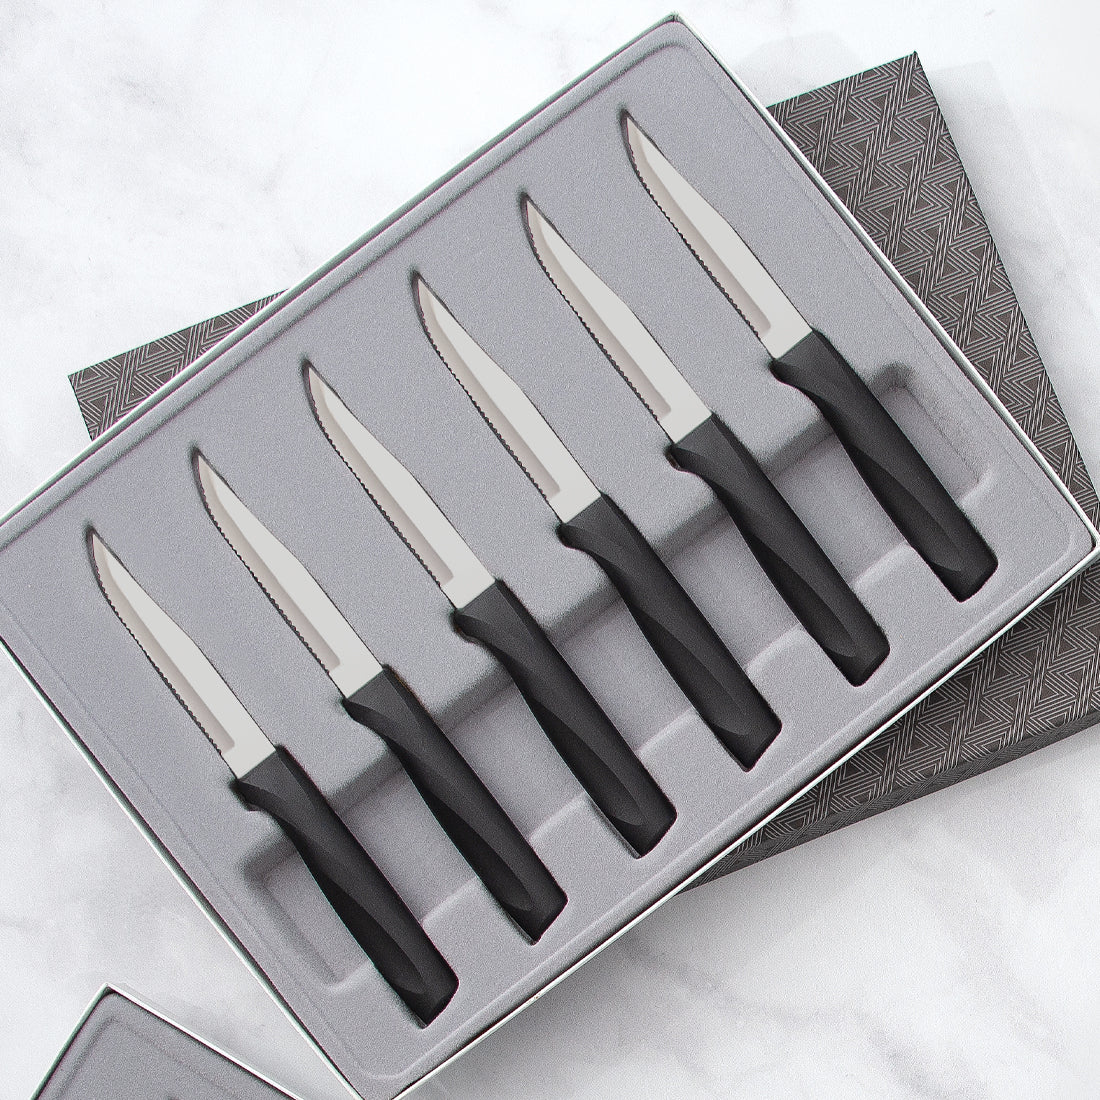 Our Table™ Stainless Steel Steak Knife Set, Set Of 4 - Harris Teeter